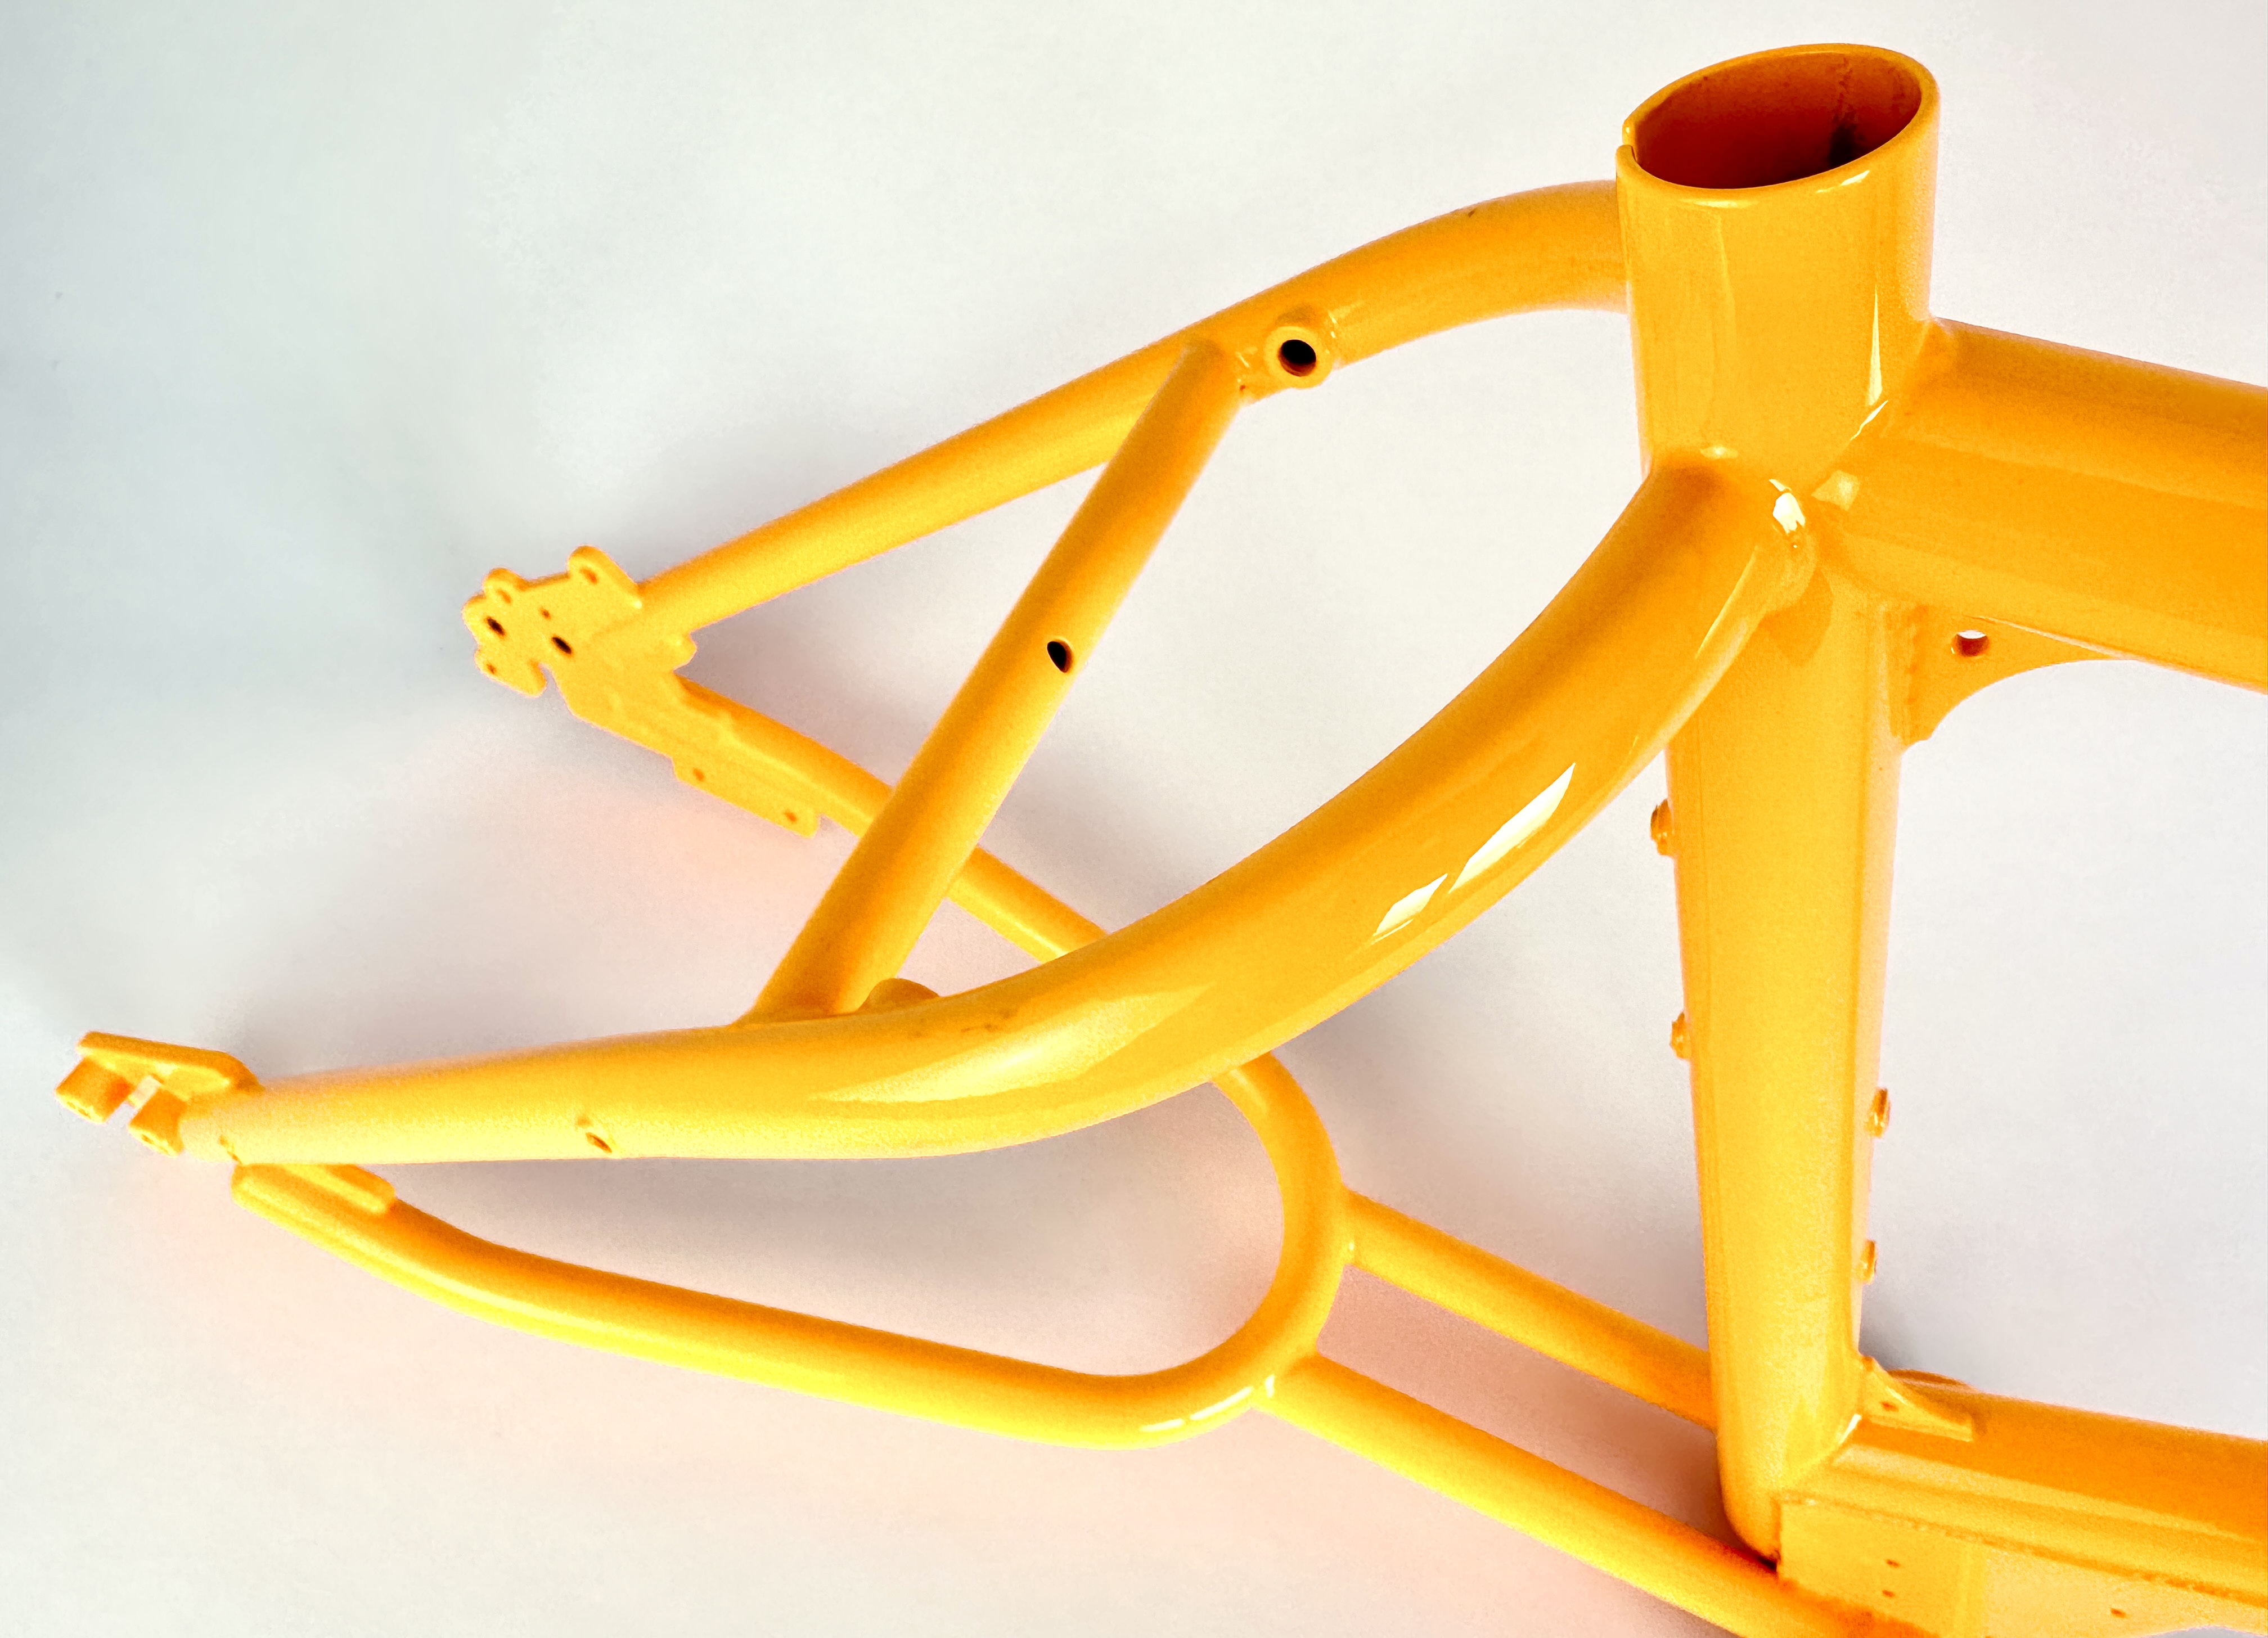 Original UDX hardtail frame, neon-orange